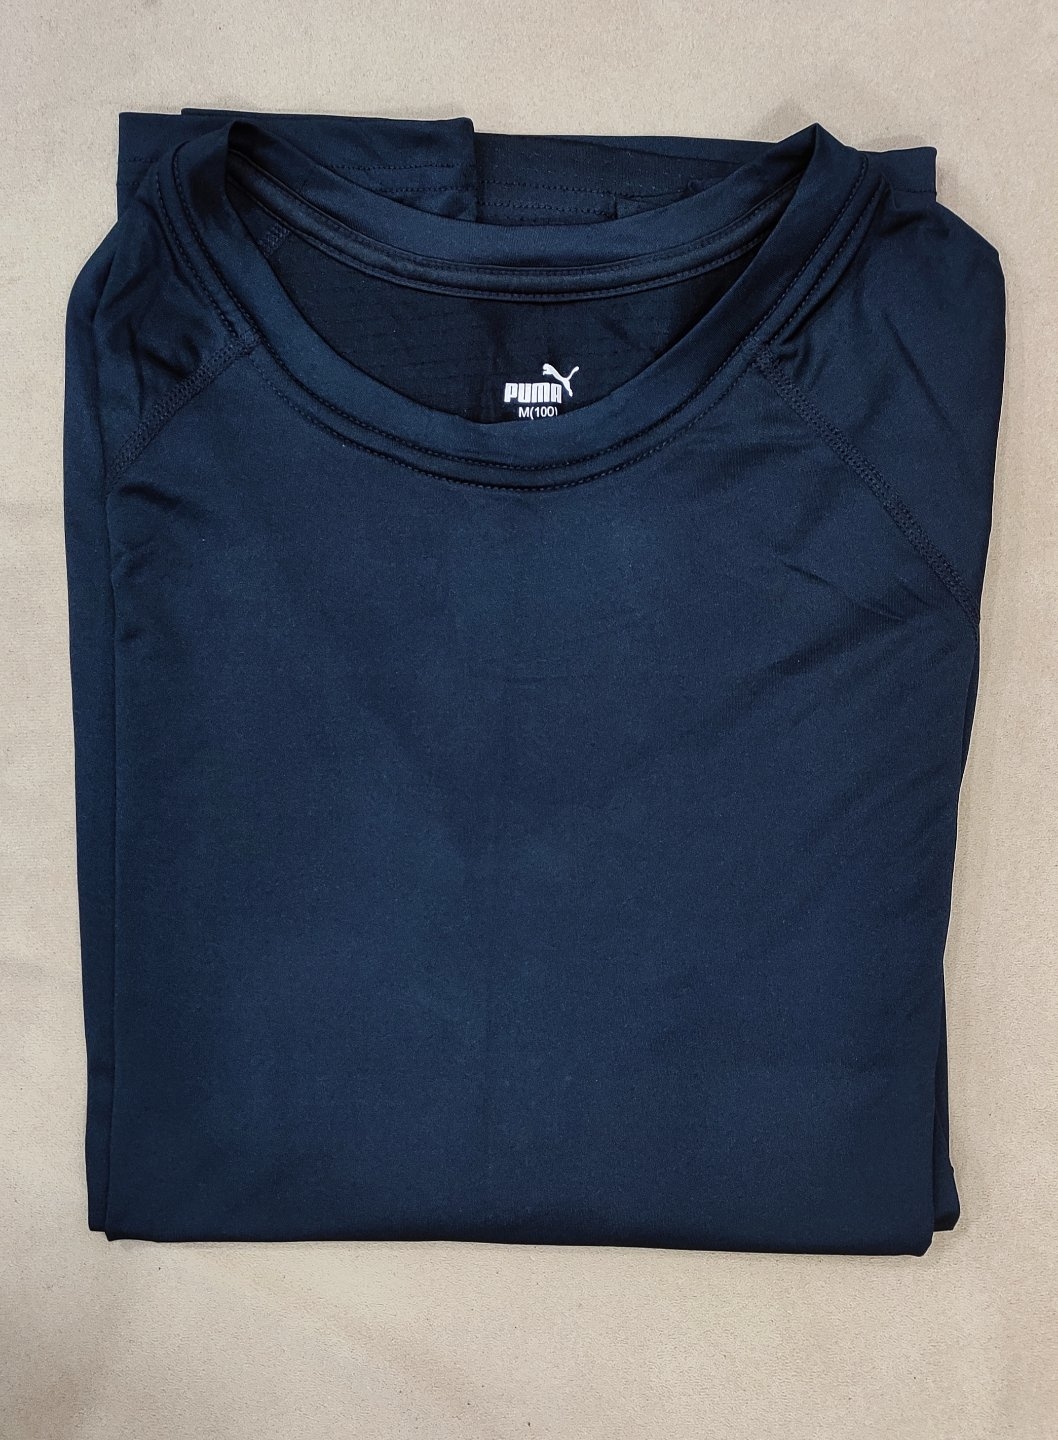 Puma Dry Cell Full Sleeve T shirt